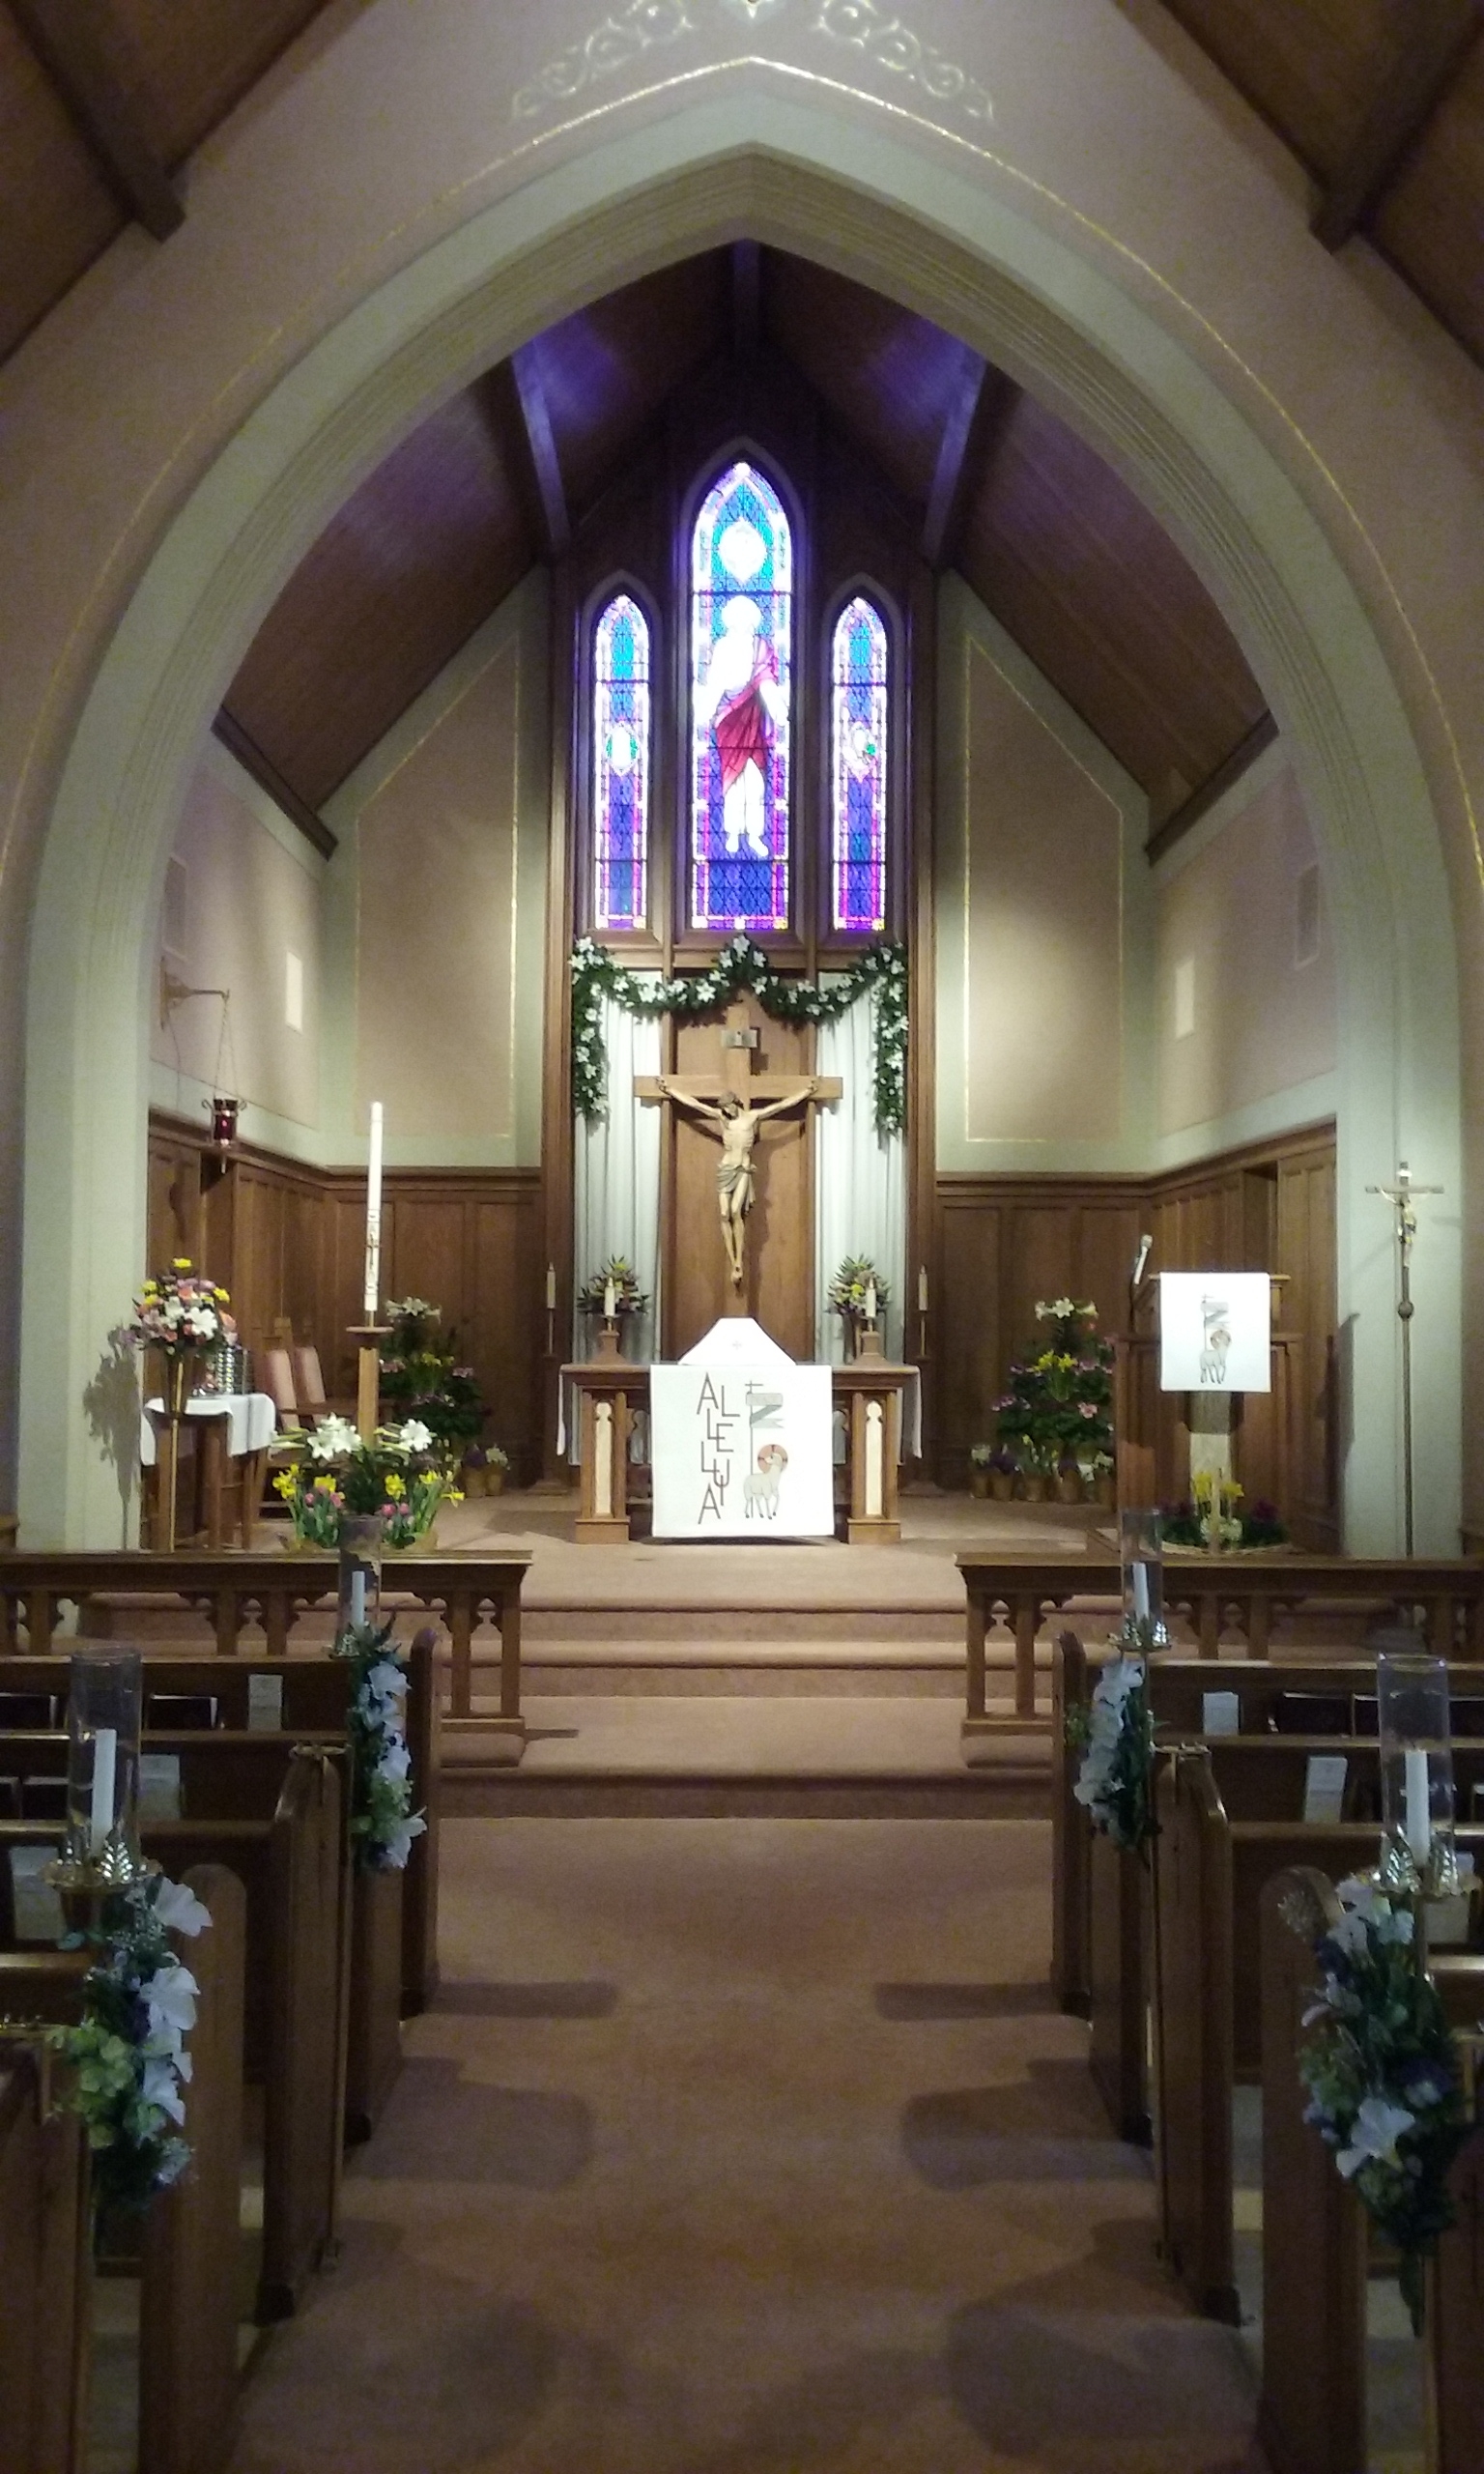 Our Savior's – Church Interior and Exterior